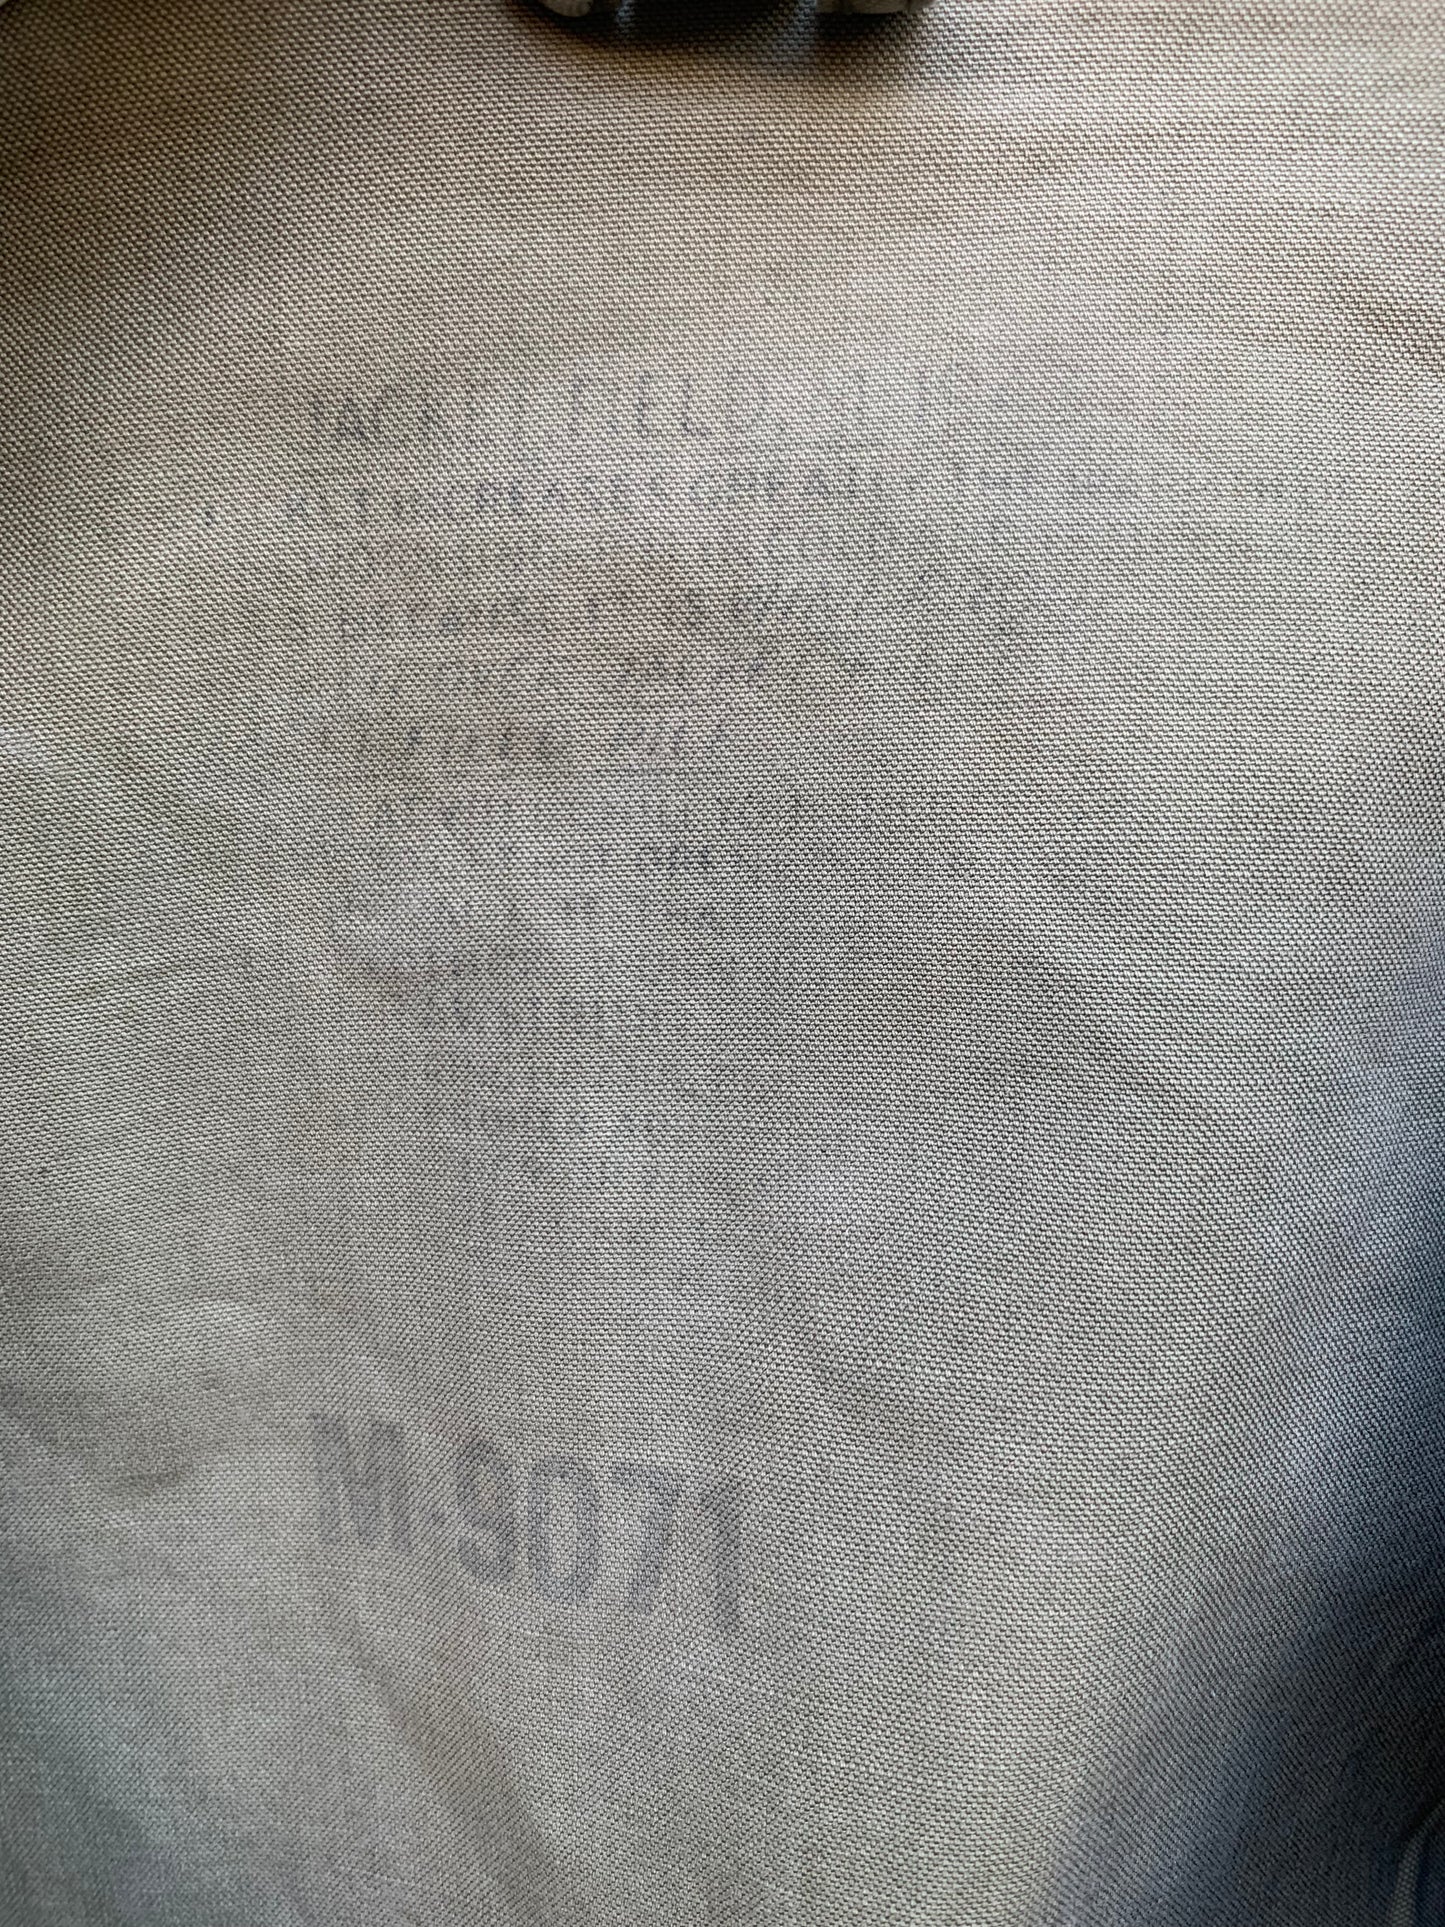 WW2 Army Field Jacket (M/L)